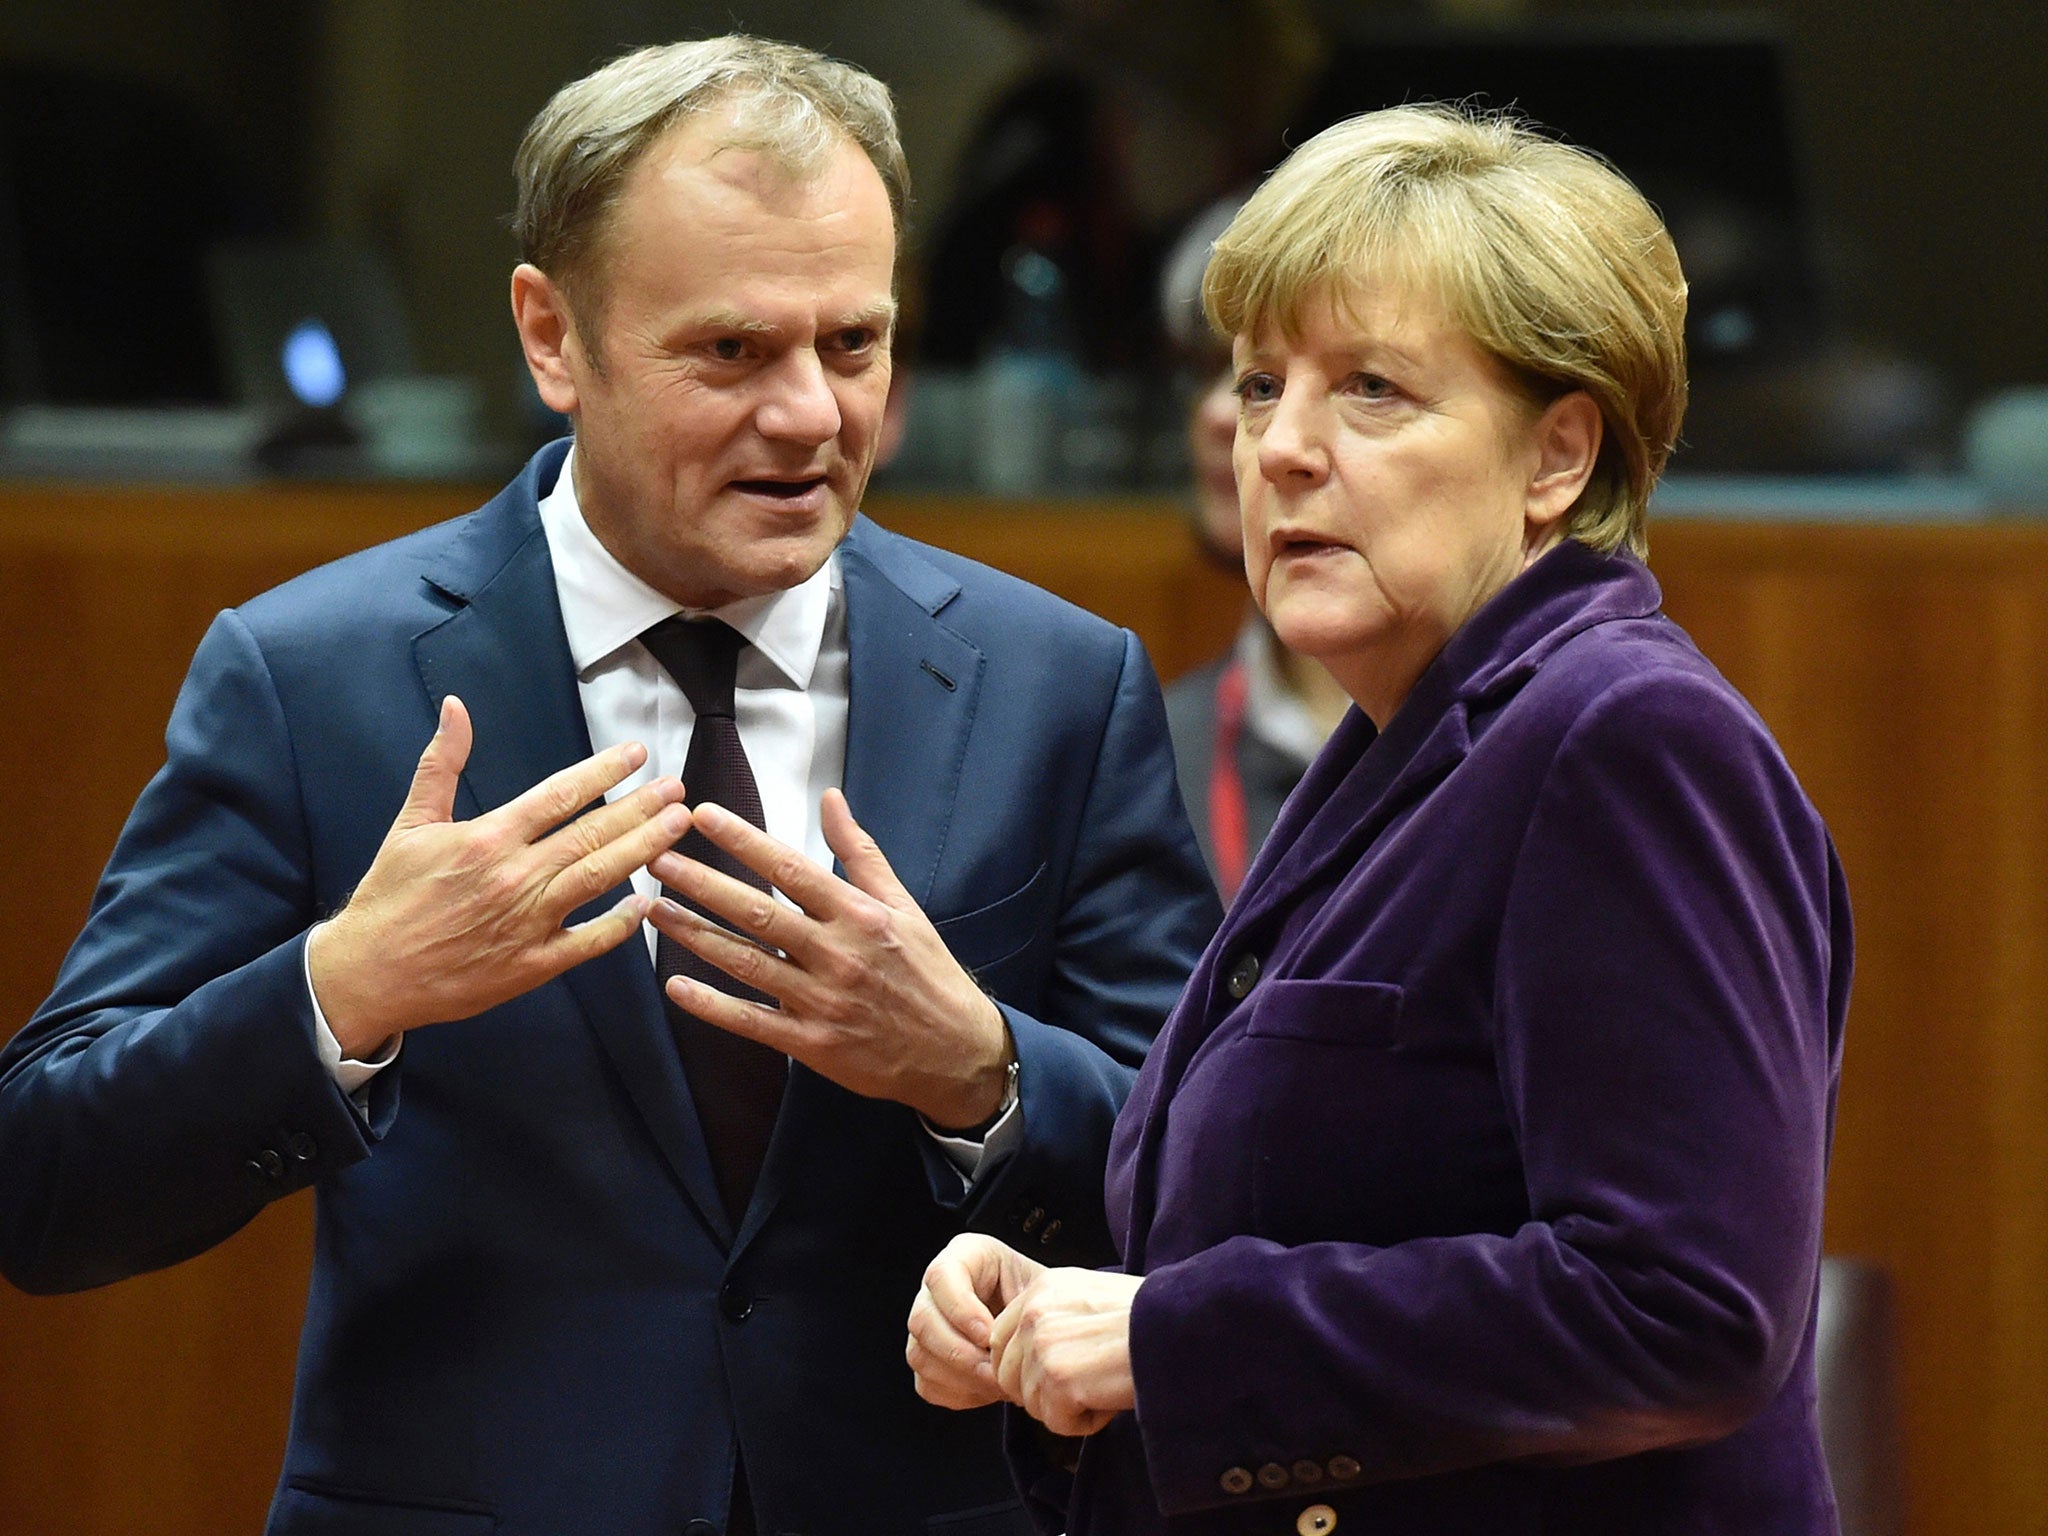 European Council president Donald Tusk, left, with German Chancellor Angela Merkel at the European Union (EU) summit